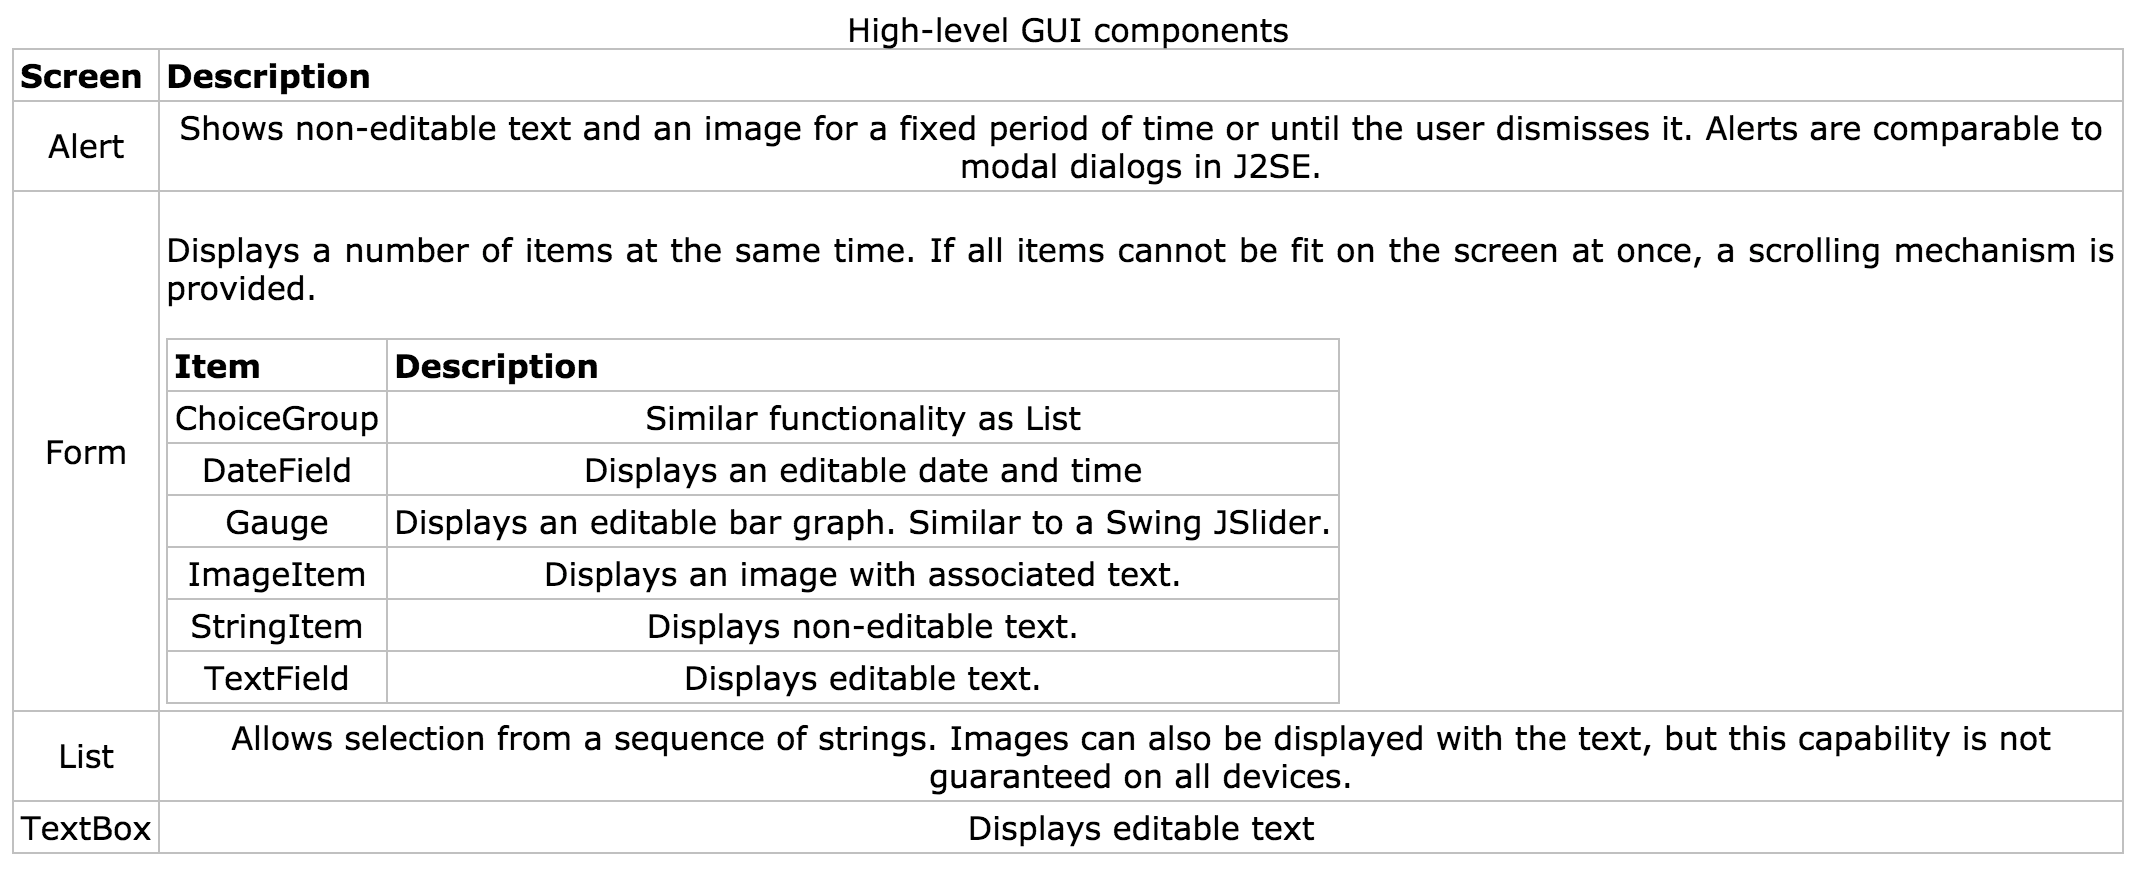 High Level GUI Components